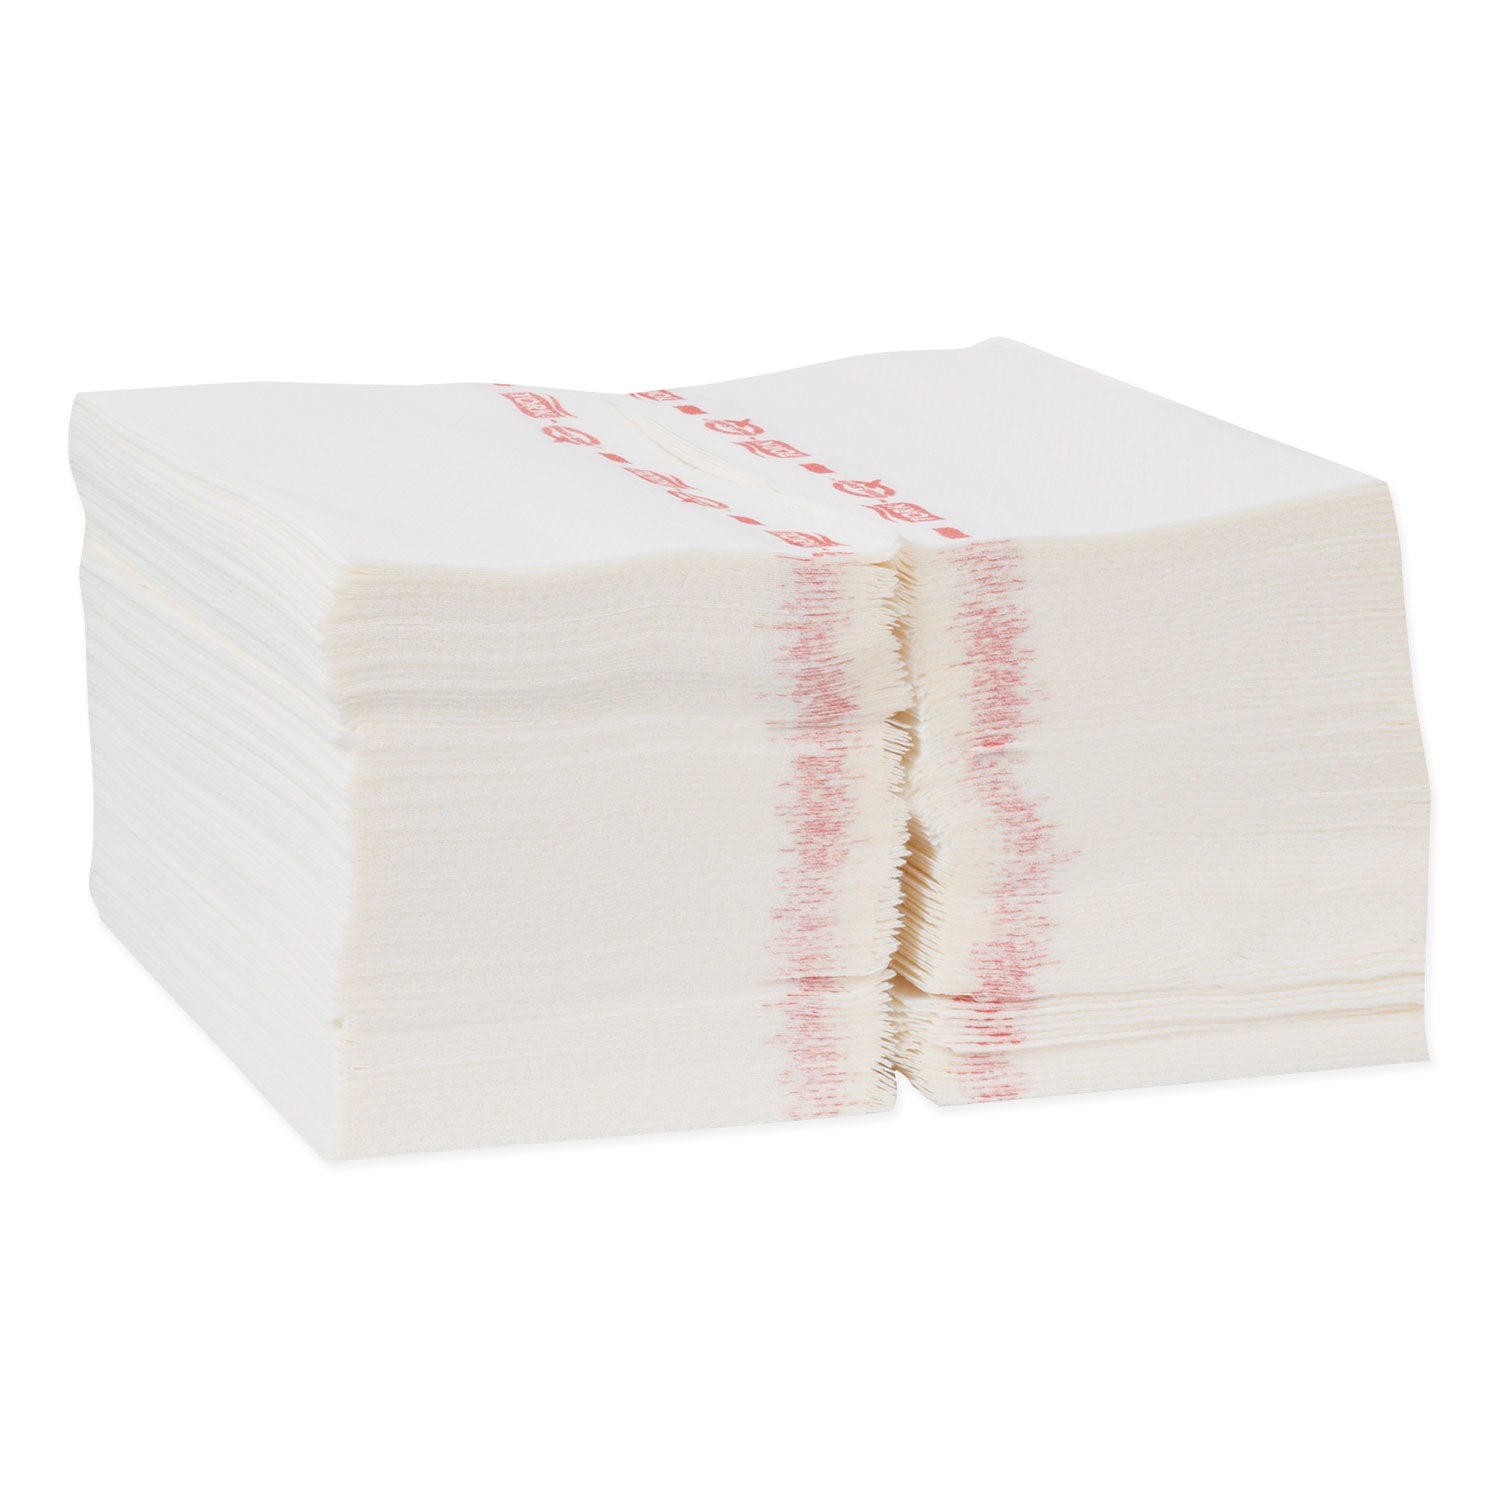 foodservice-cloth-13-x-21-white-150-carton_trk192195 - 7